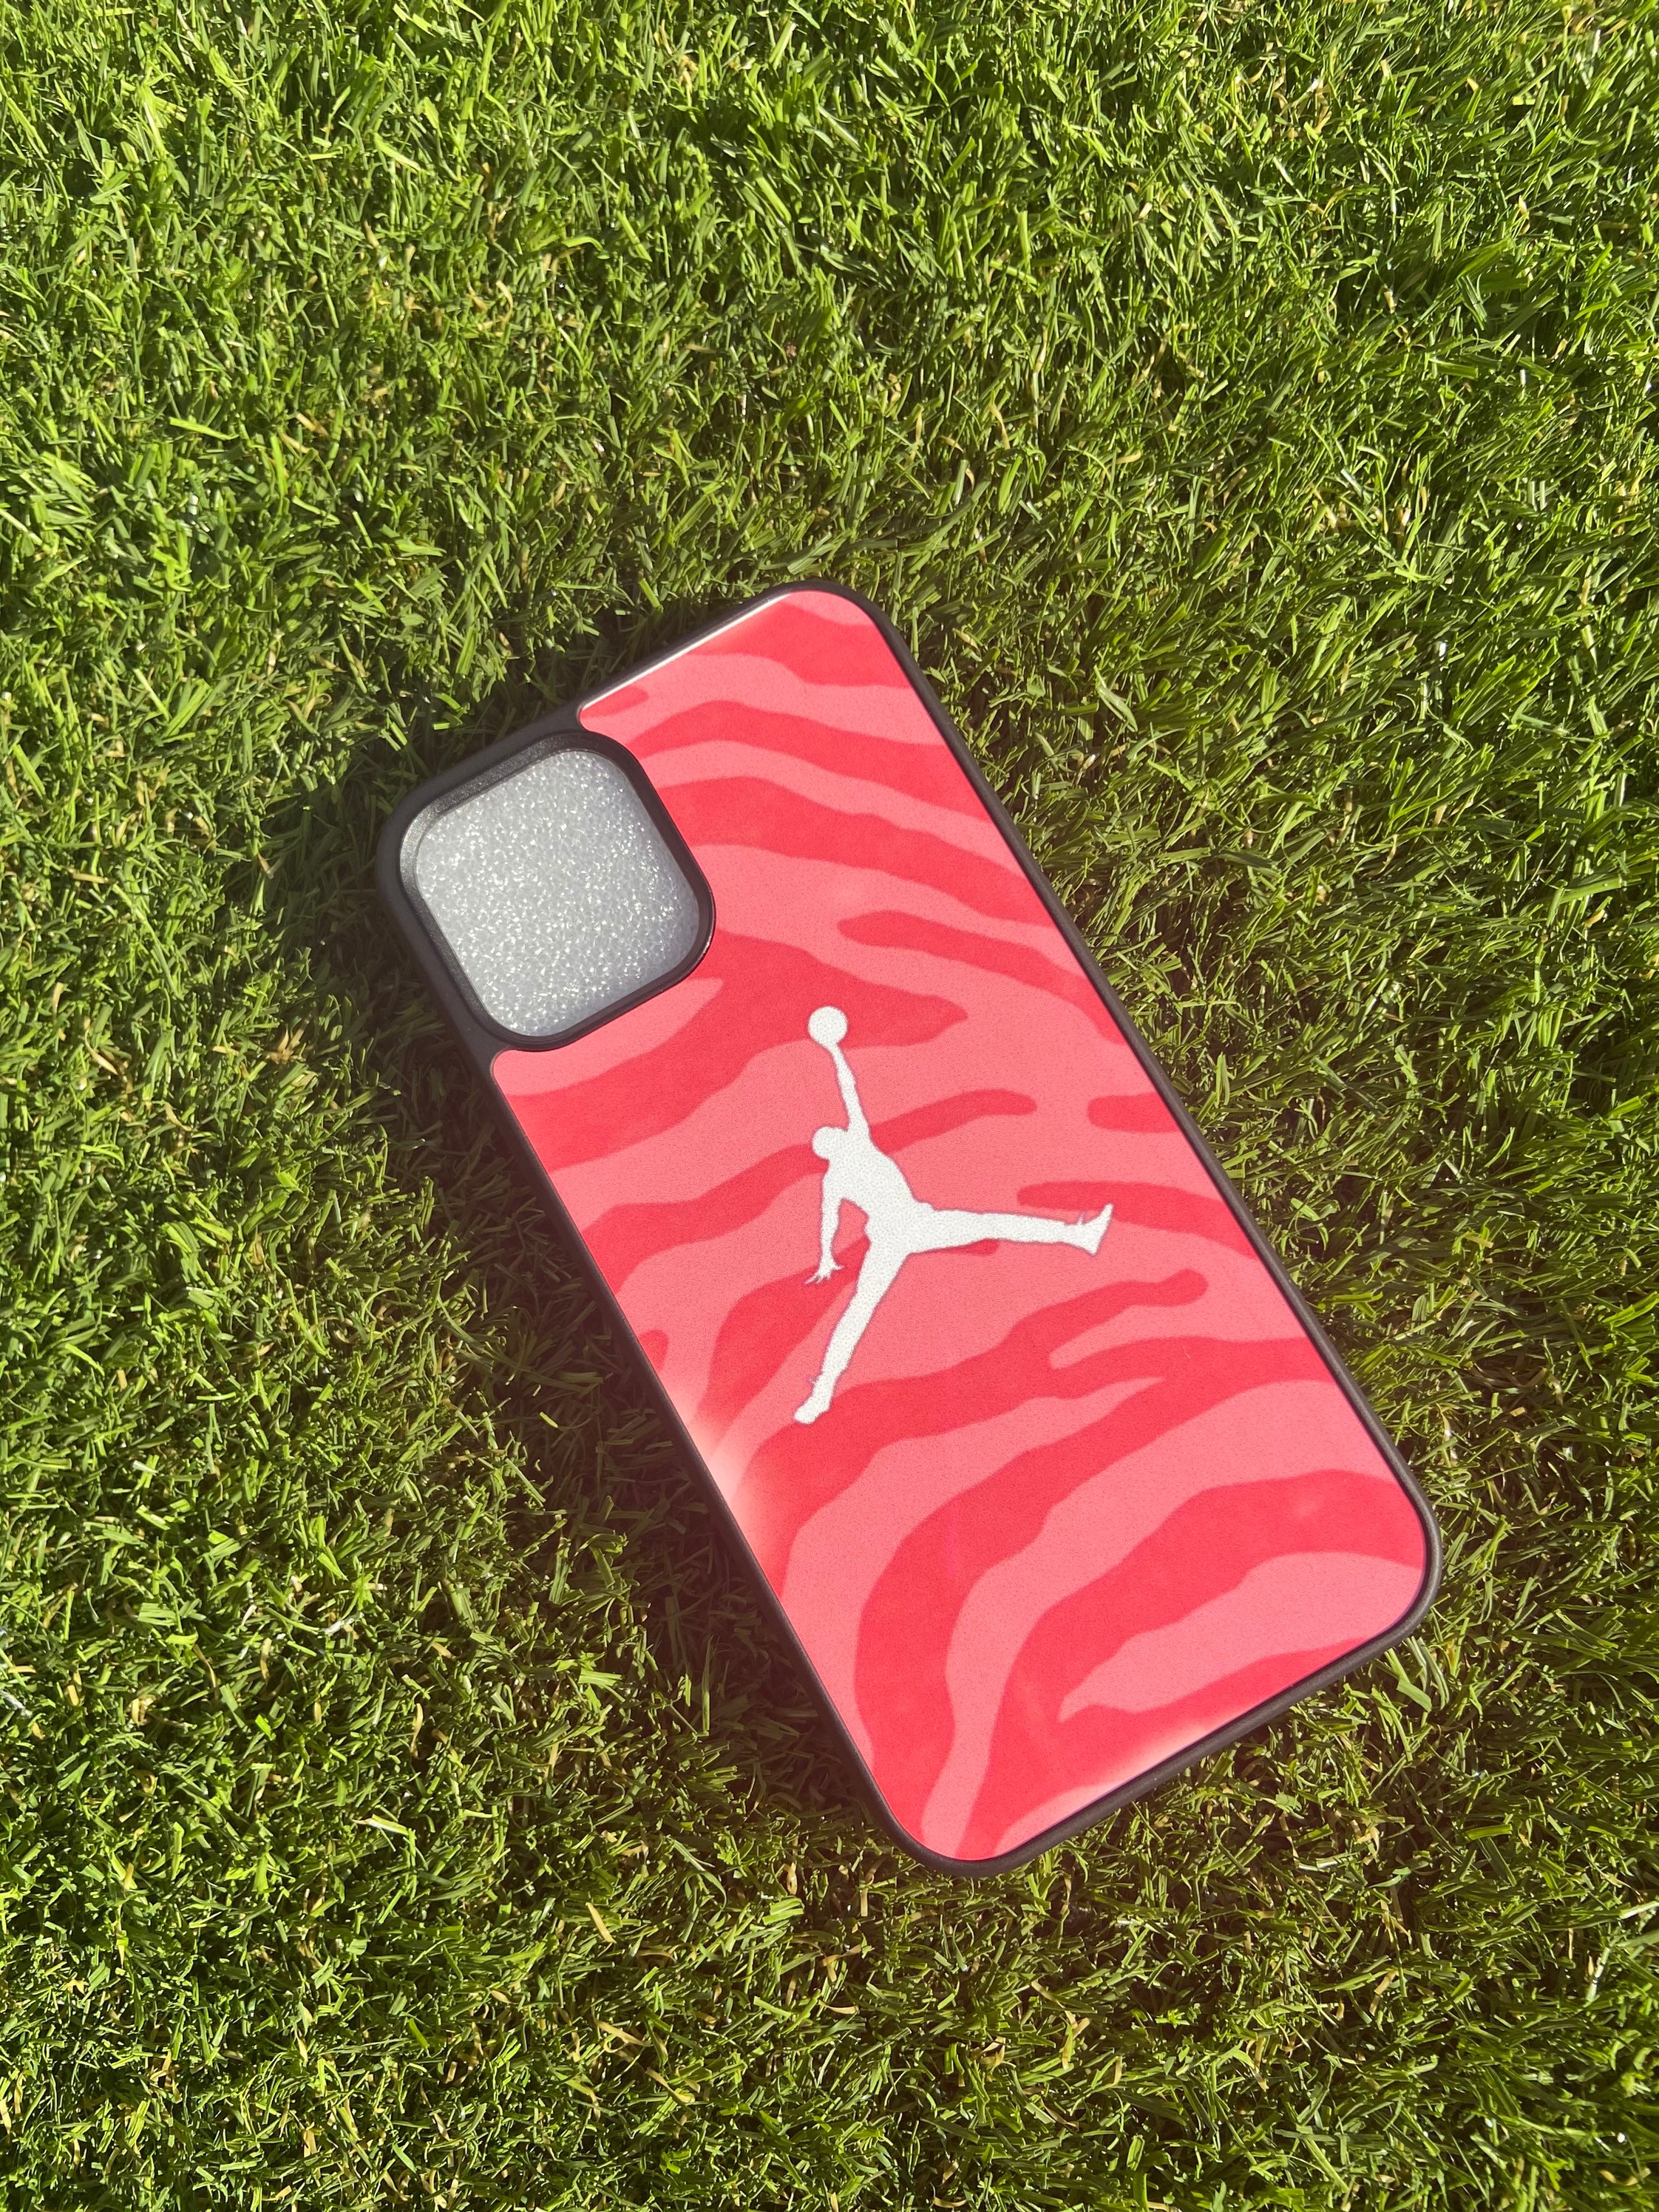 Supreme x Air Jordan iPhone 14 Pro Case